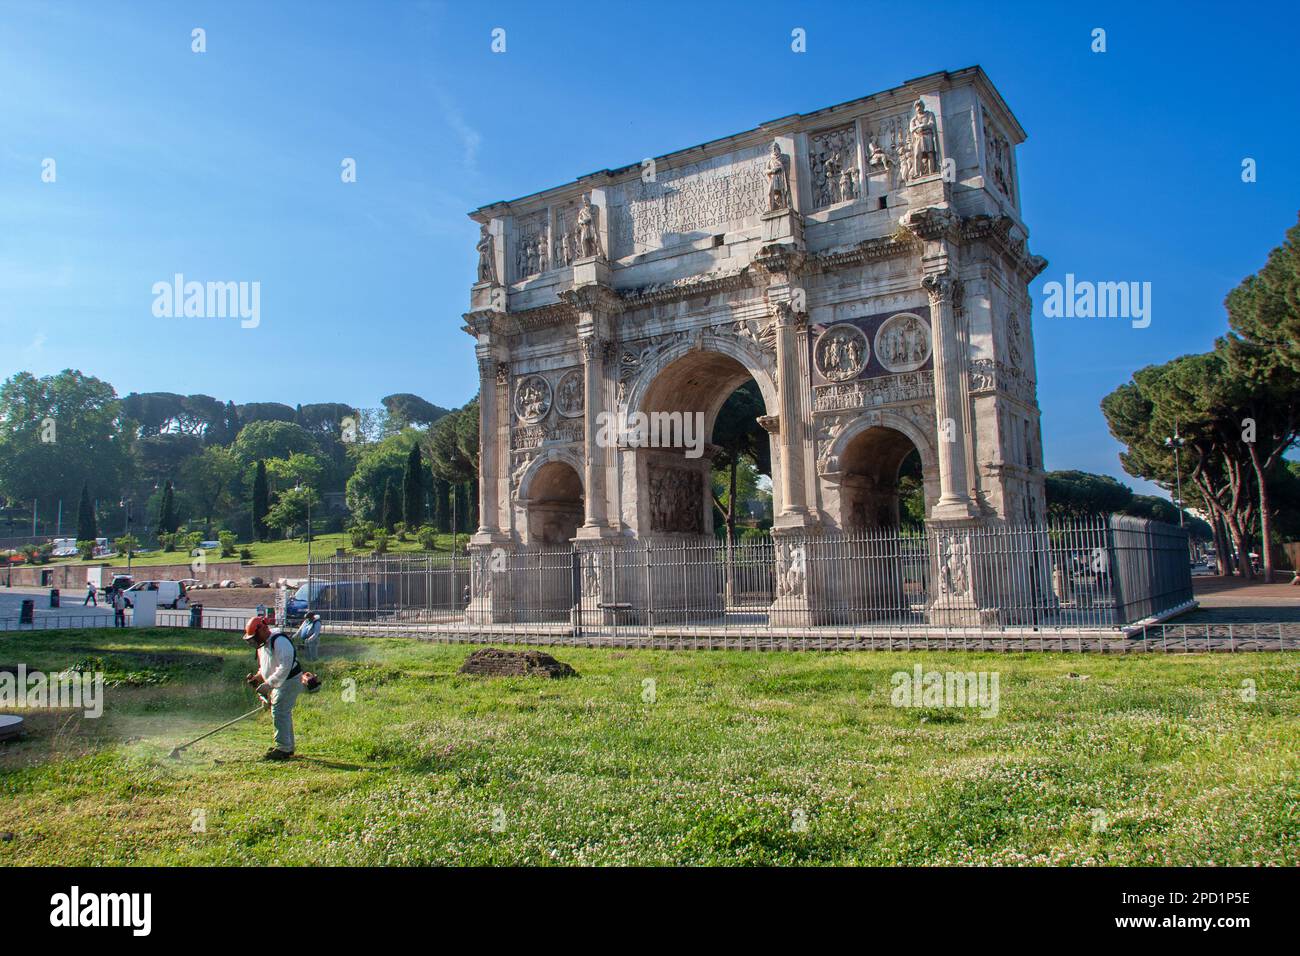 Italy, Rome, Arco di Costantino or Arch of Constantine Stock Photo